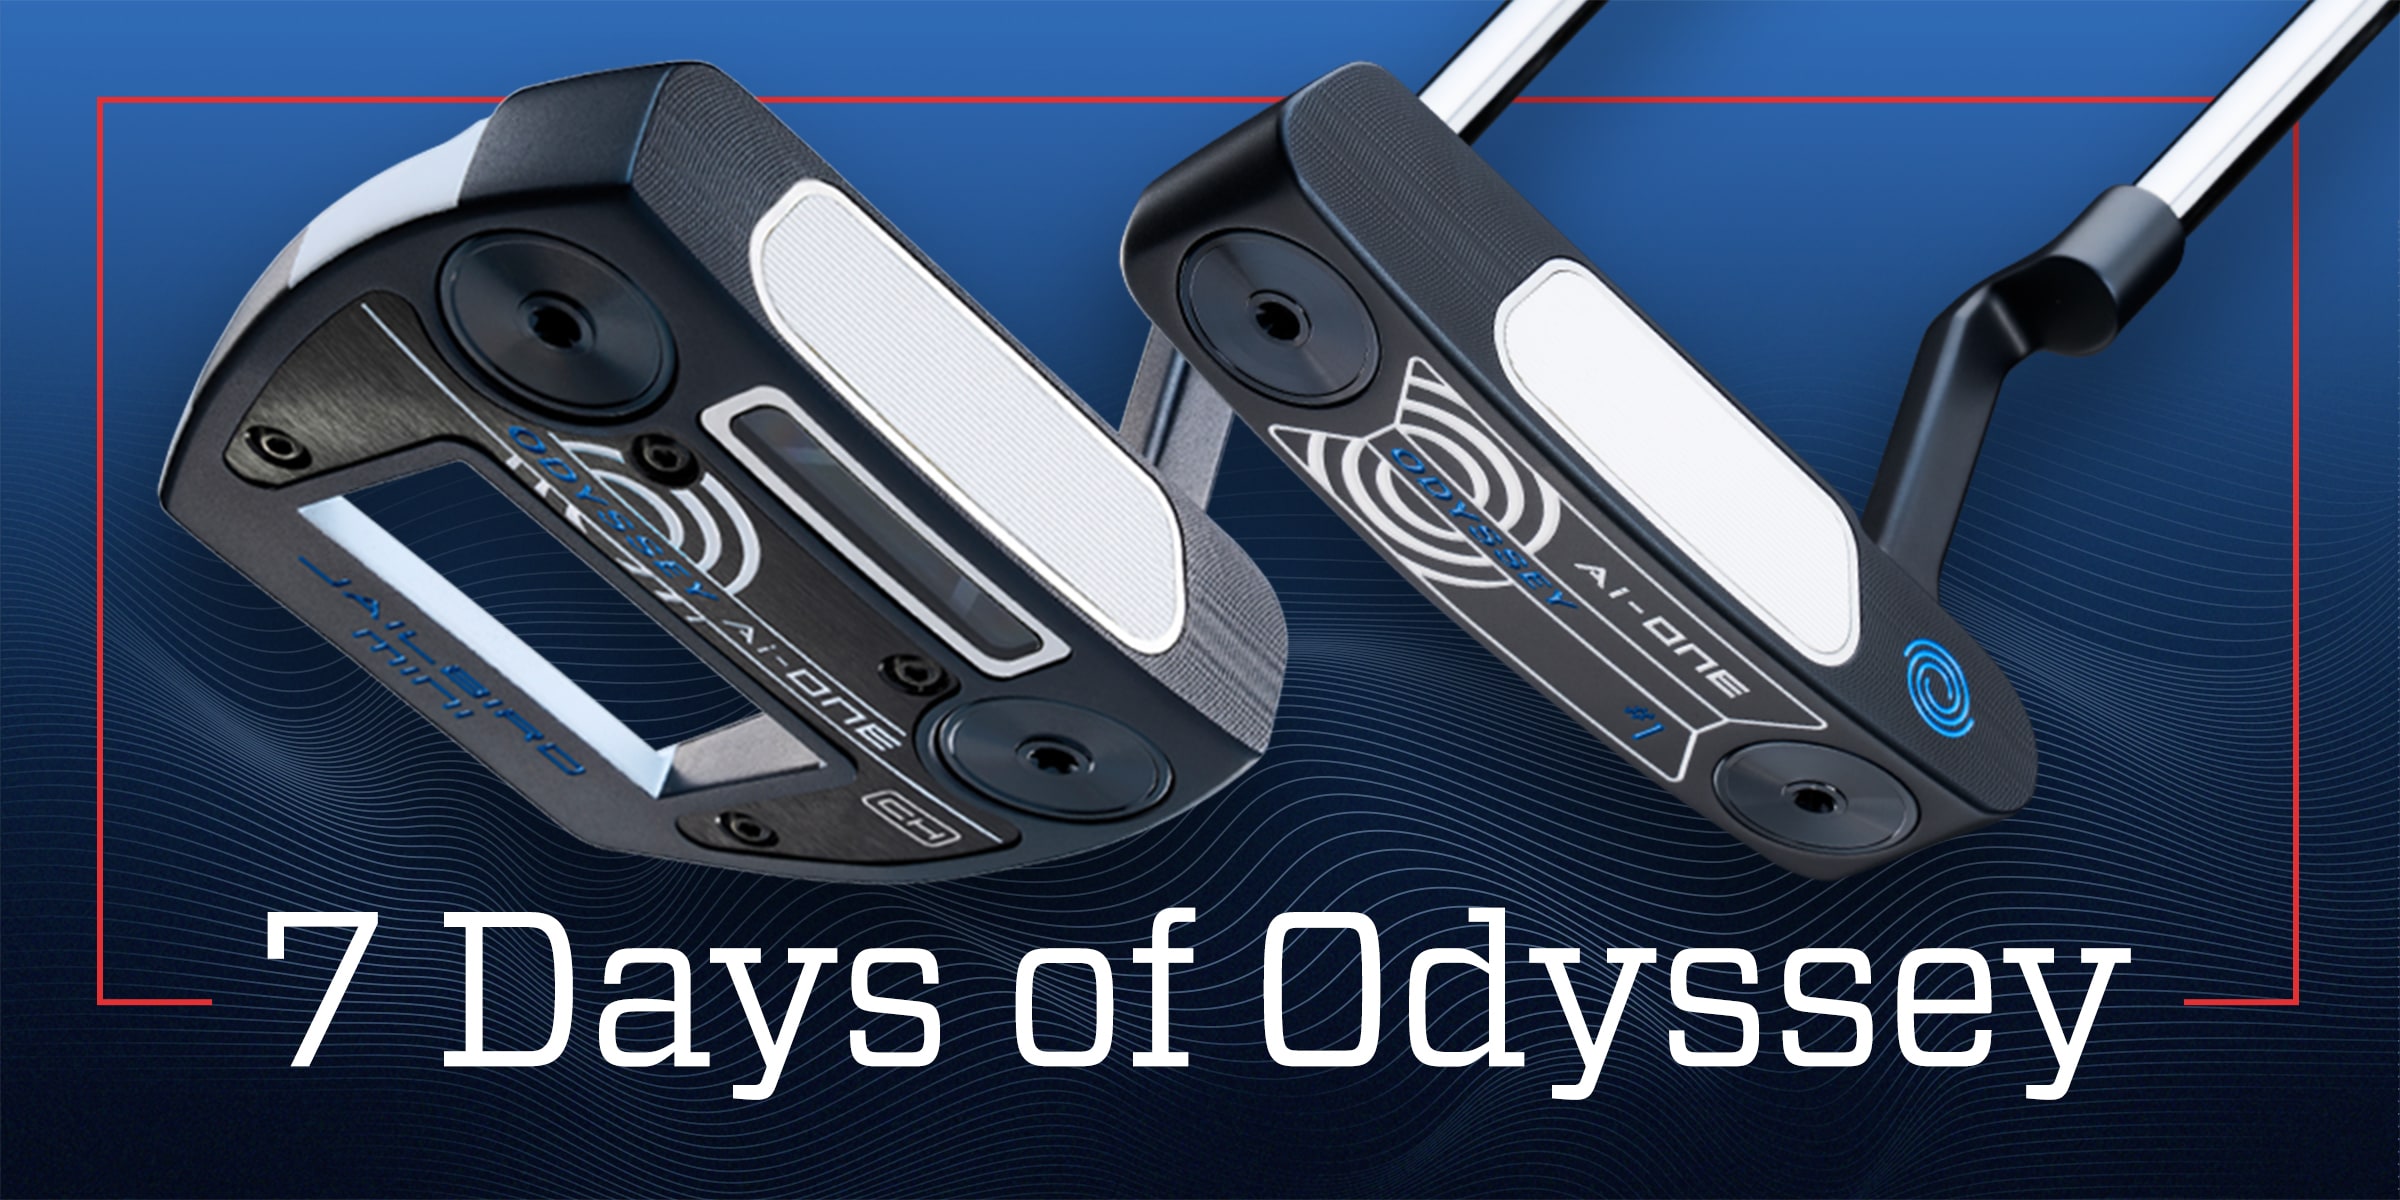  Seven days of Odyssey